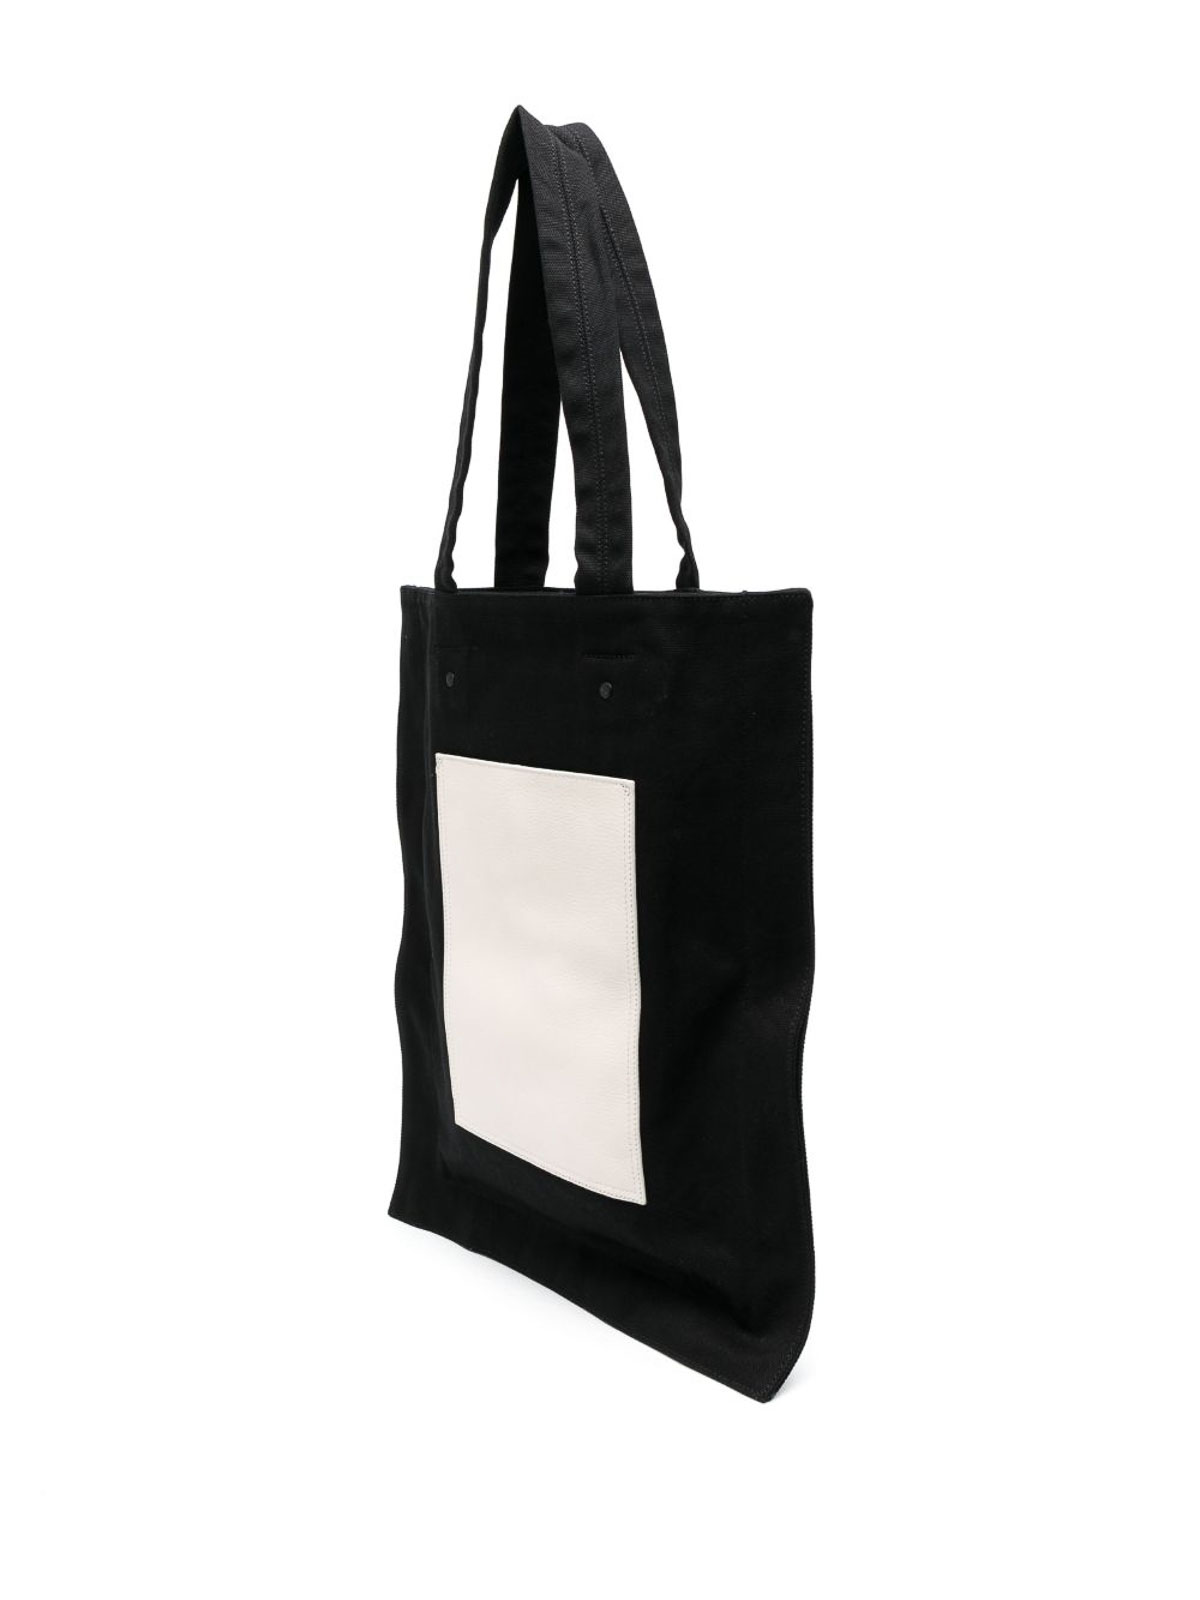 Cross body bags Y-3 - Y-3 lux tote bag - IN5161 | thebs.com [ikrix